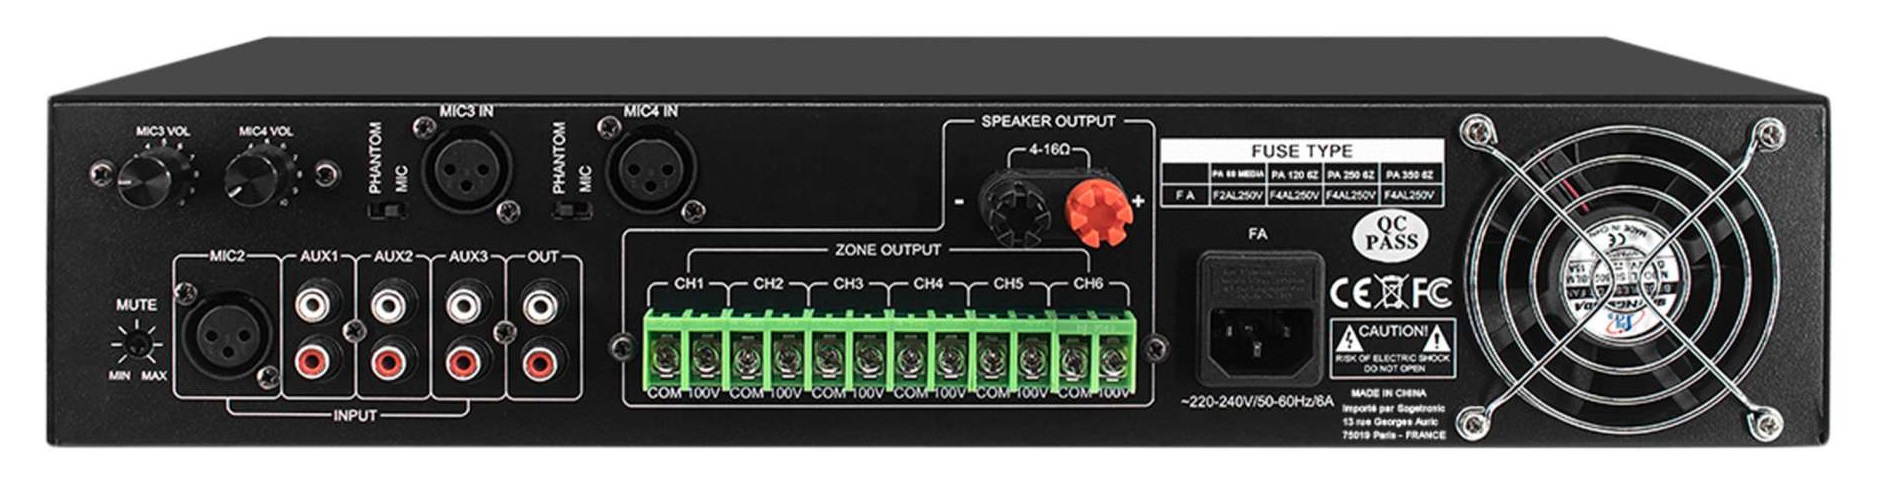 Definitive Audio Pa 350 6z - Multi-kanalen krachtversterker - Variation 1